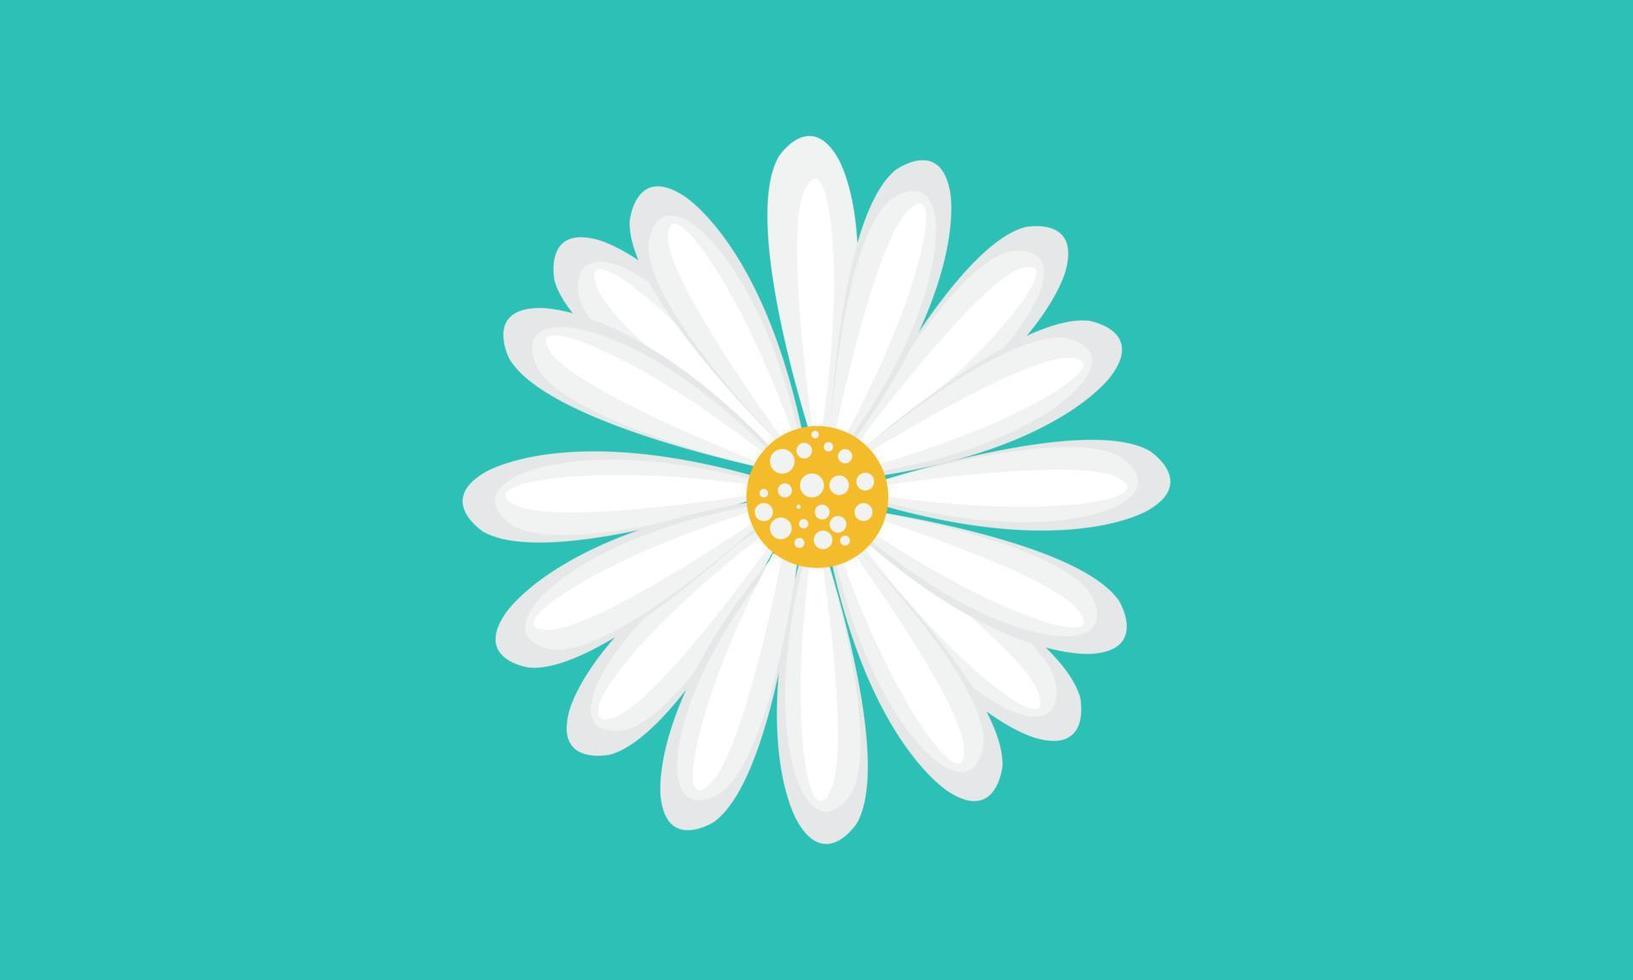 chamomile flower vector illustration on white background. creative icon.